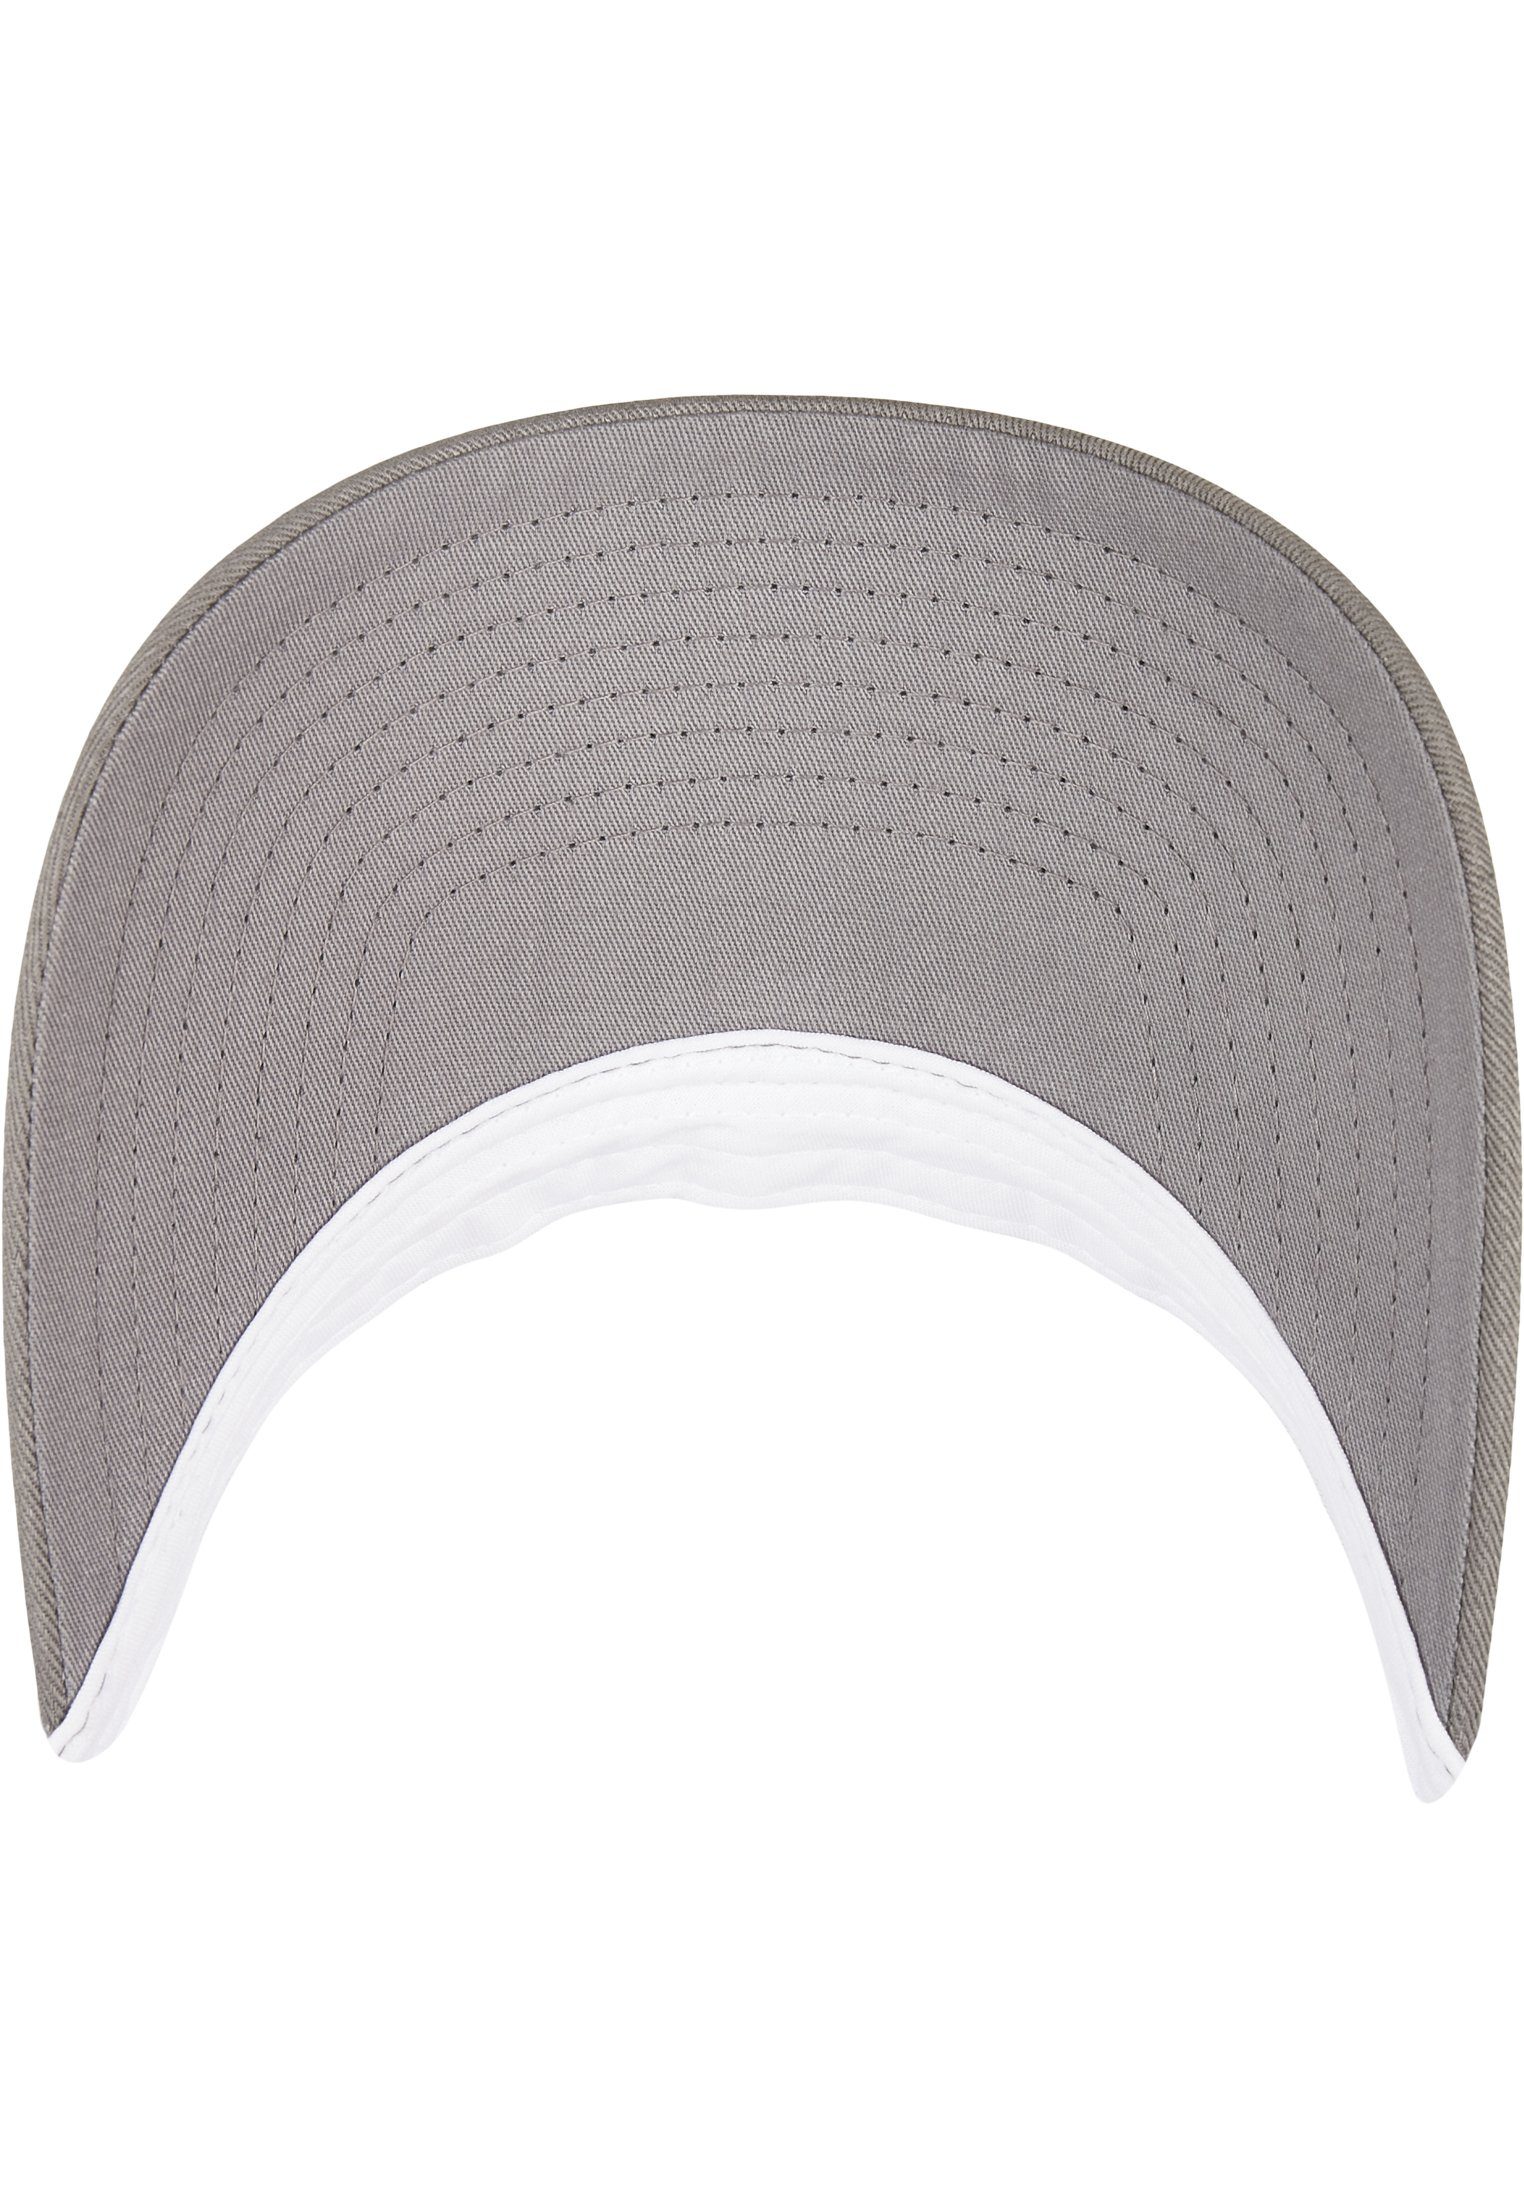 RETRO Flexfit CLASSICS TRUCKER Caps CAP RECYCLED 2-TONE Flex YP Cap grey/white